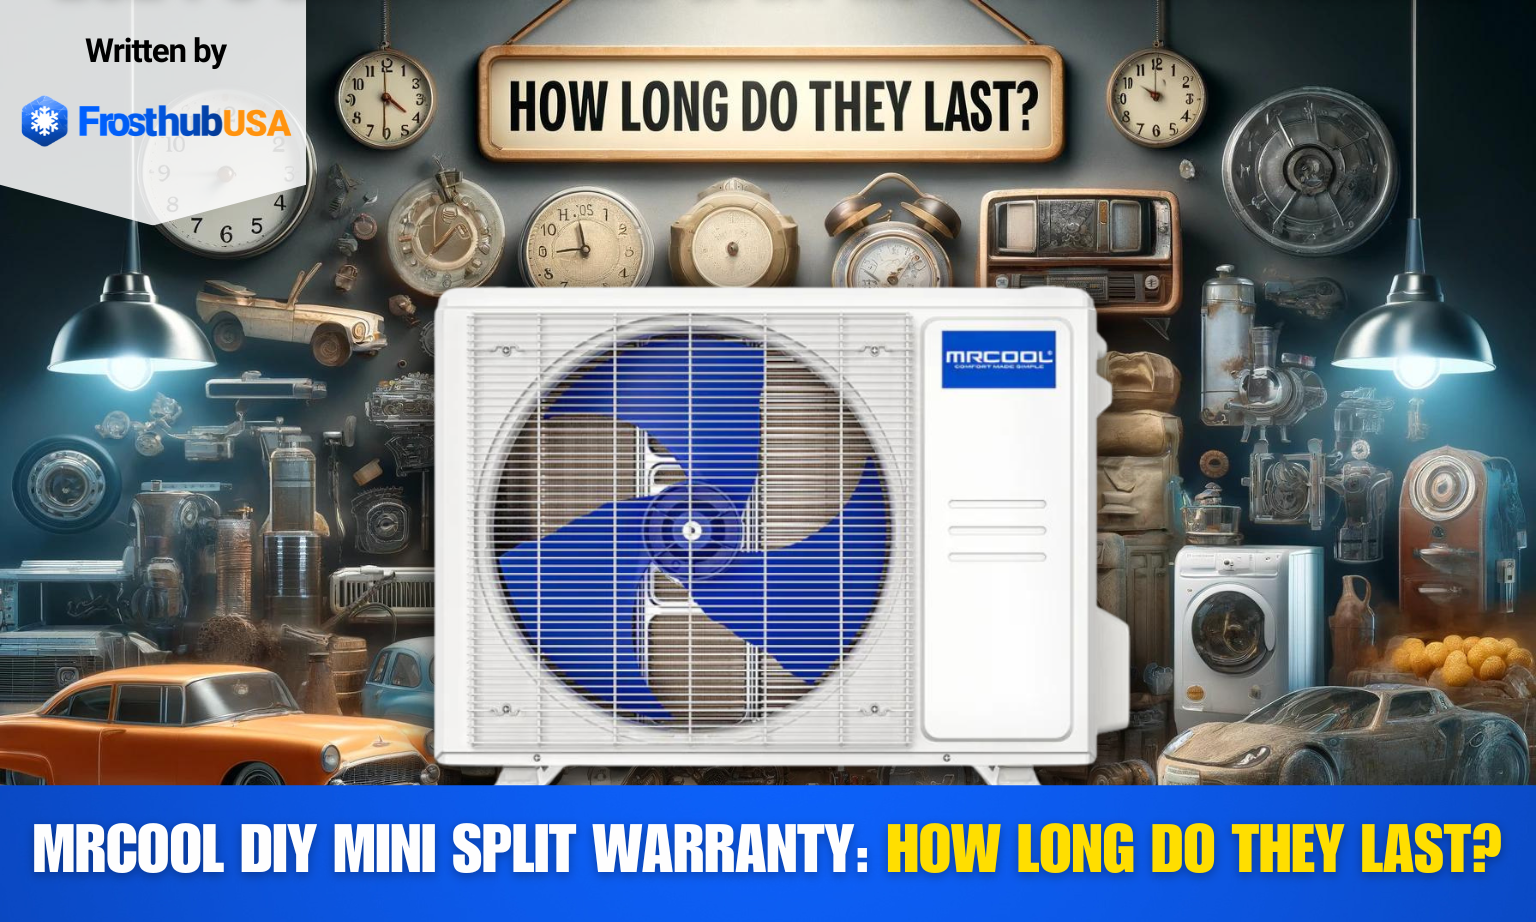 MRCOOL DIY mini-split warranty: How long do they last? - FrosthubUSA